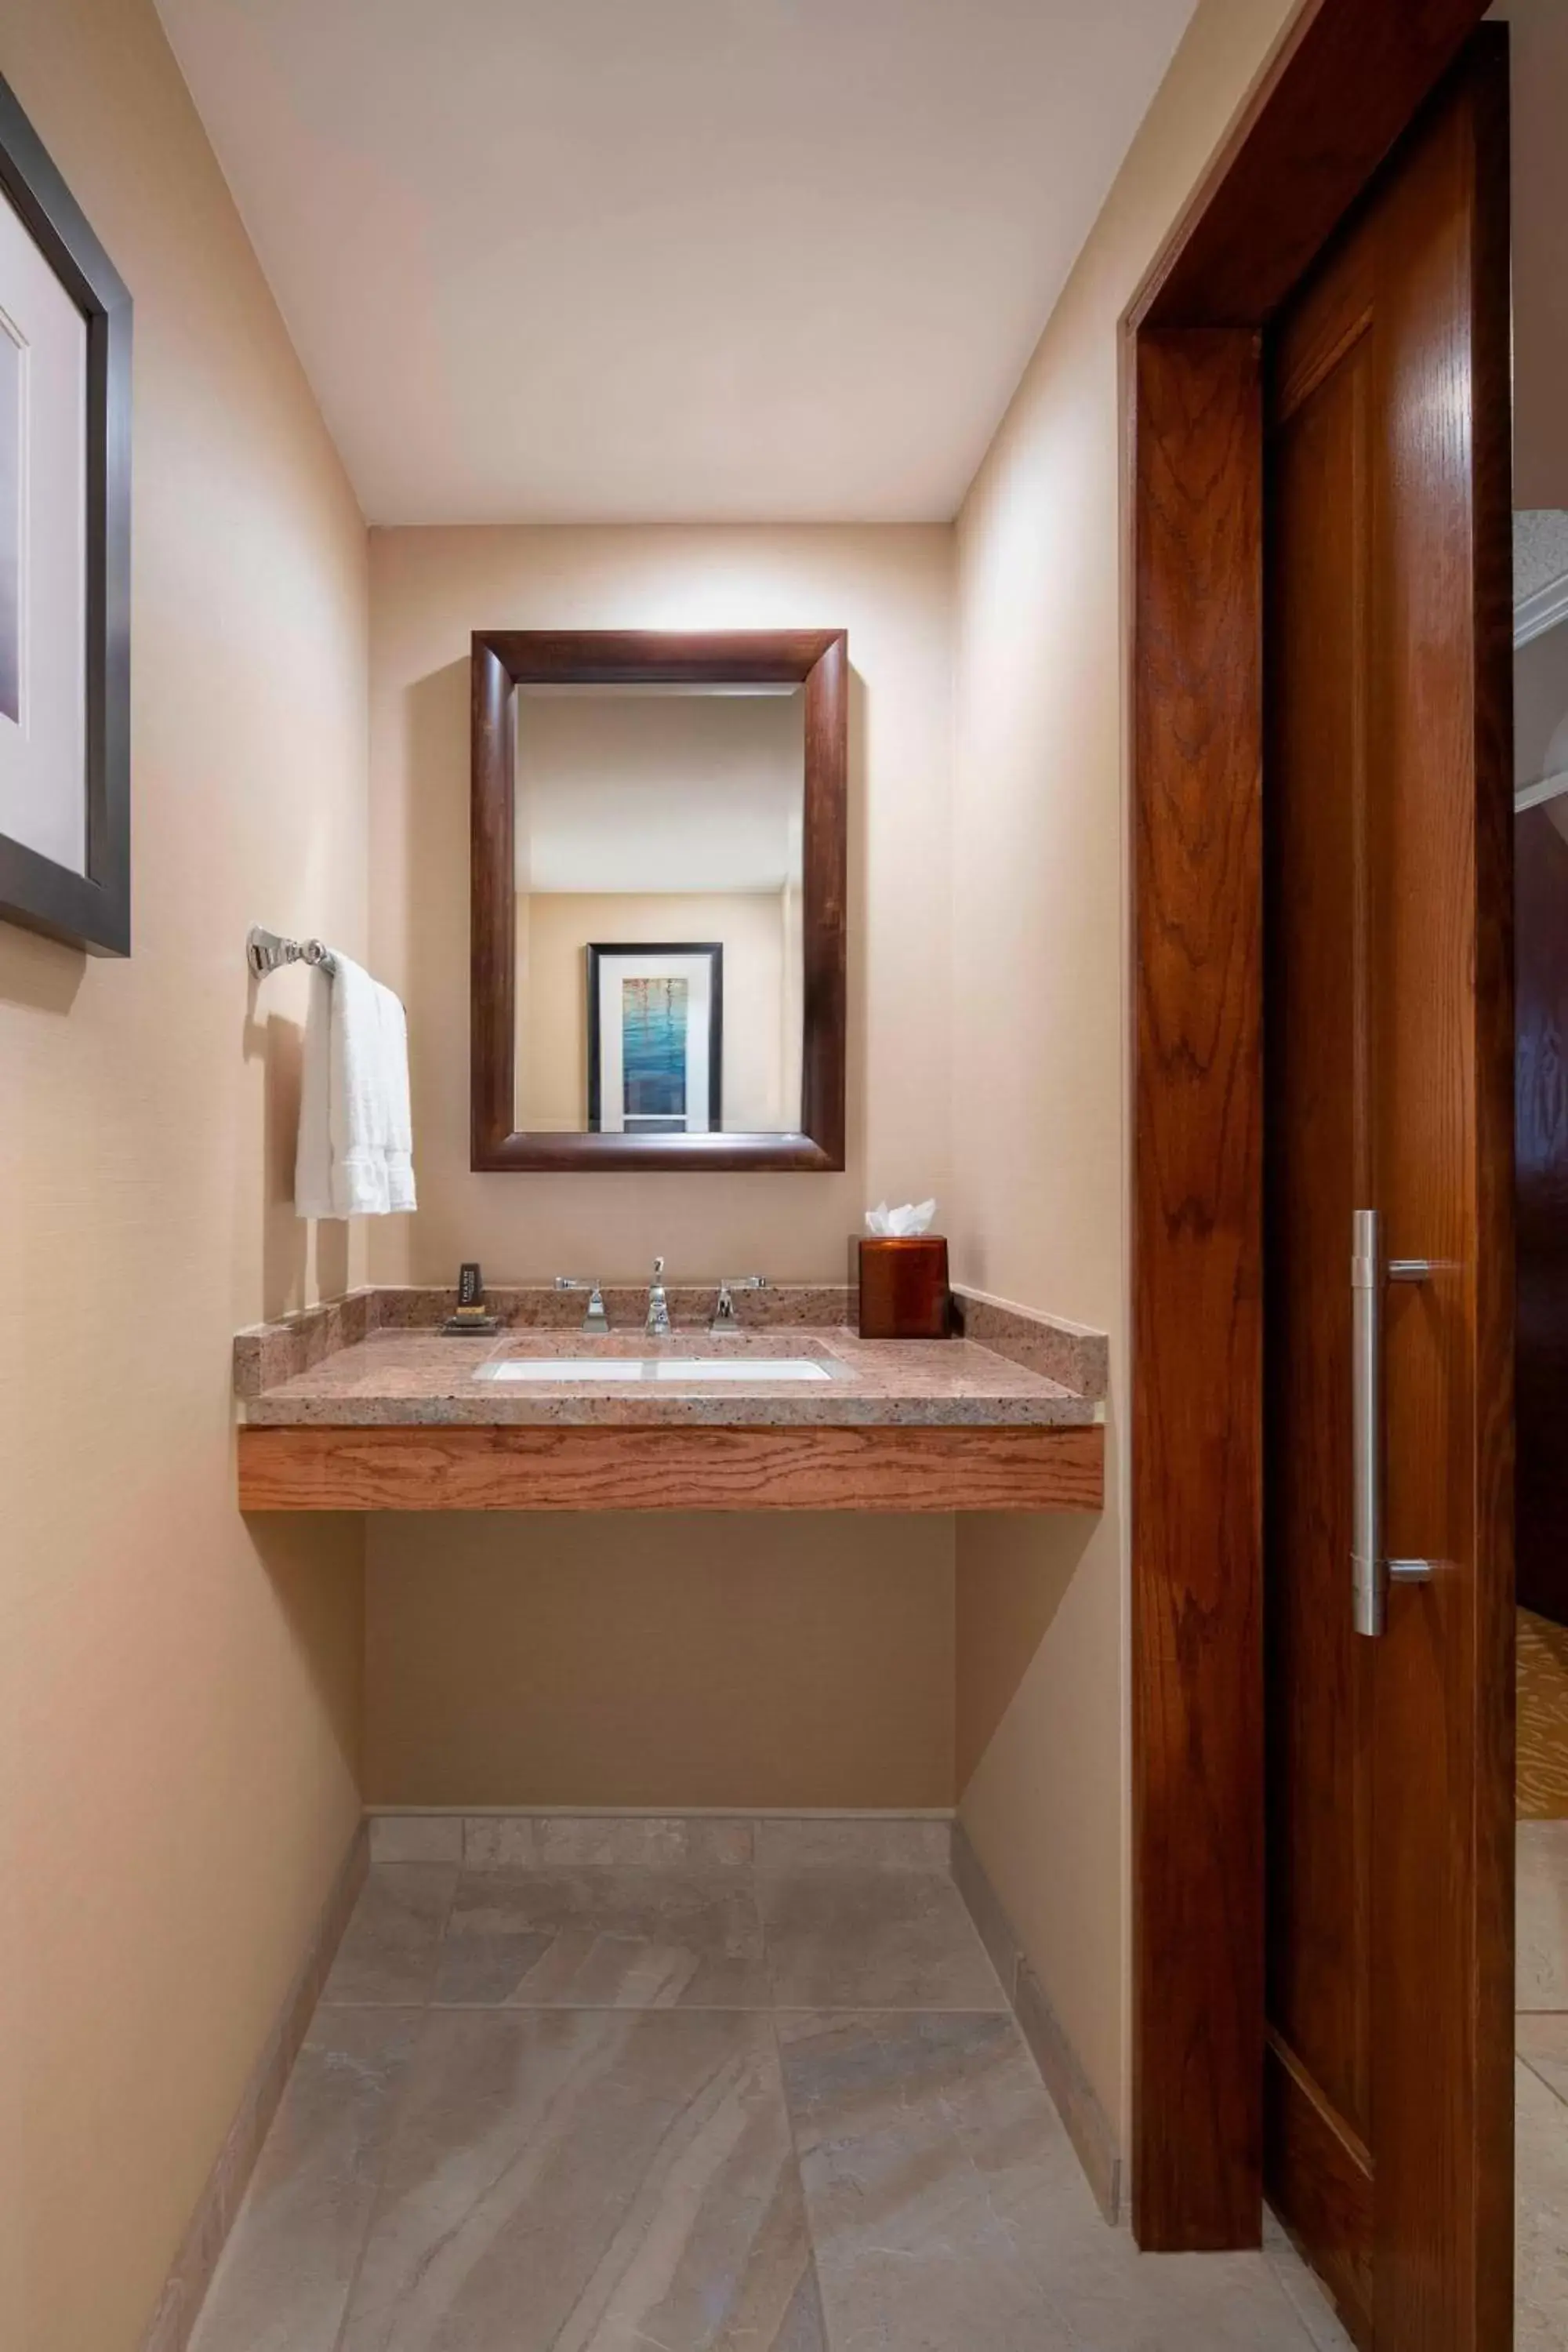 Bathroom in The Lincoln Marriott Cornhusker Hotel